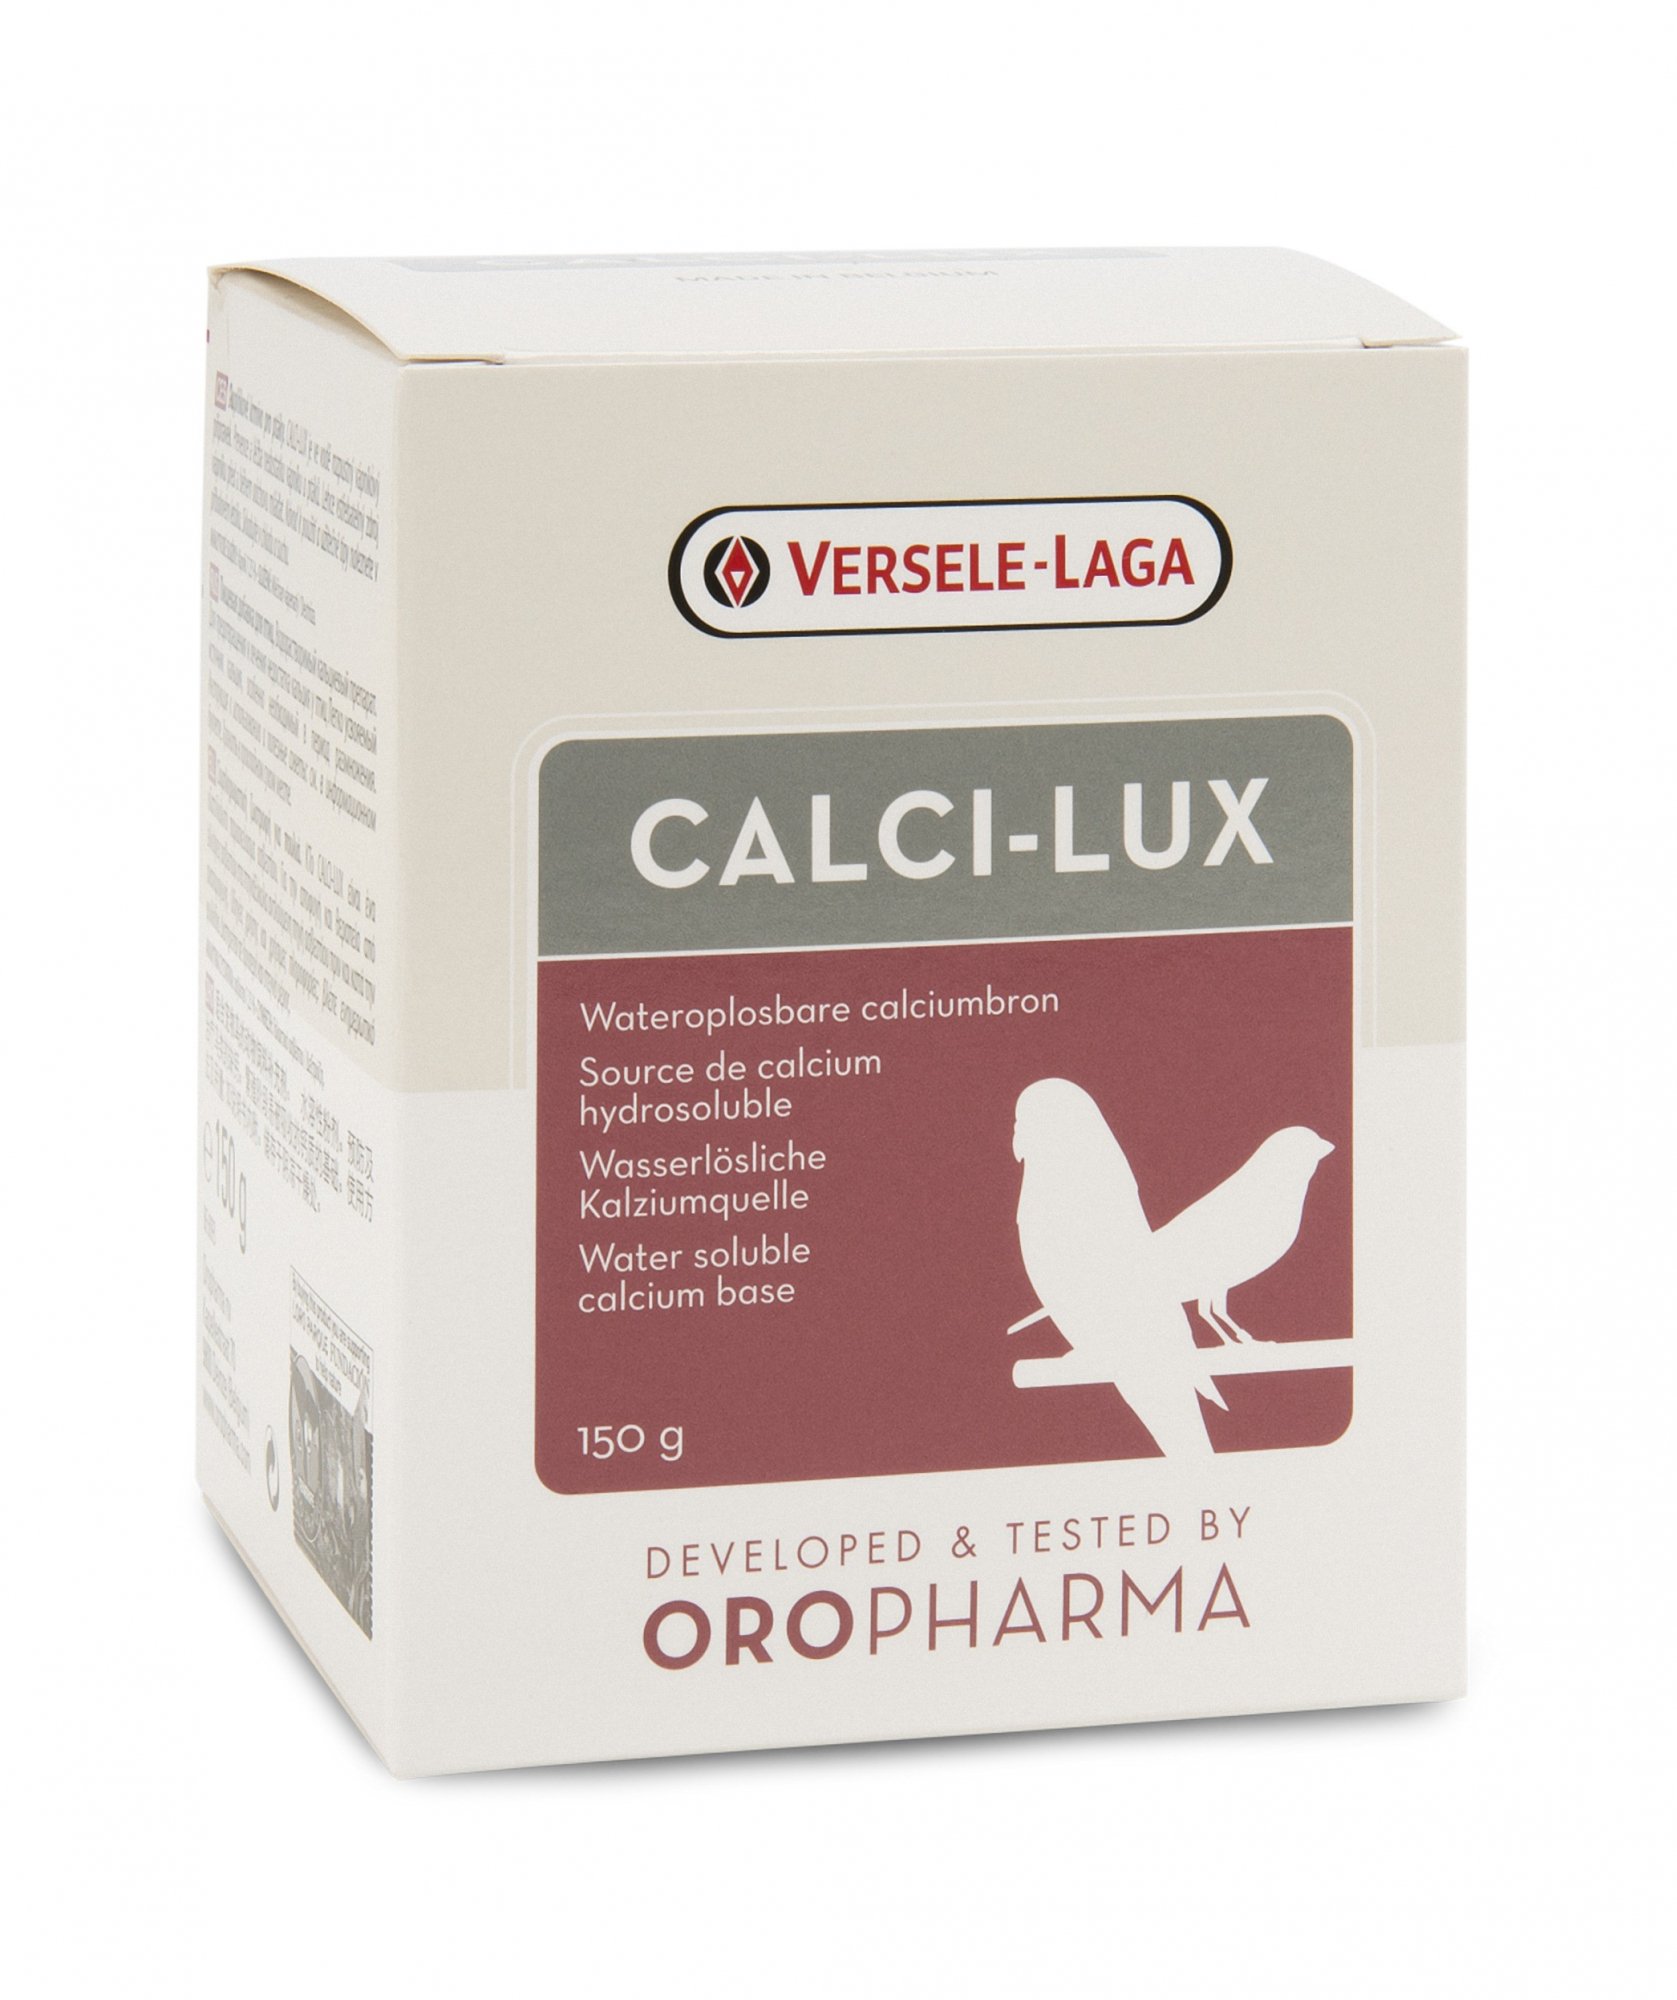 Oropharma Calci-Lux Wateroplosbare calciumbron